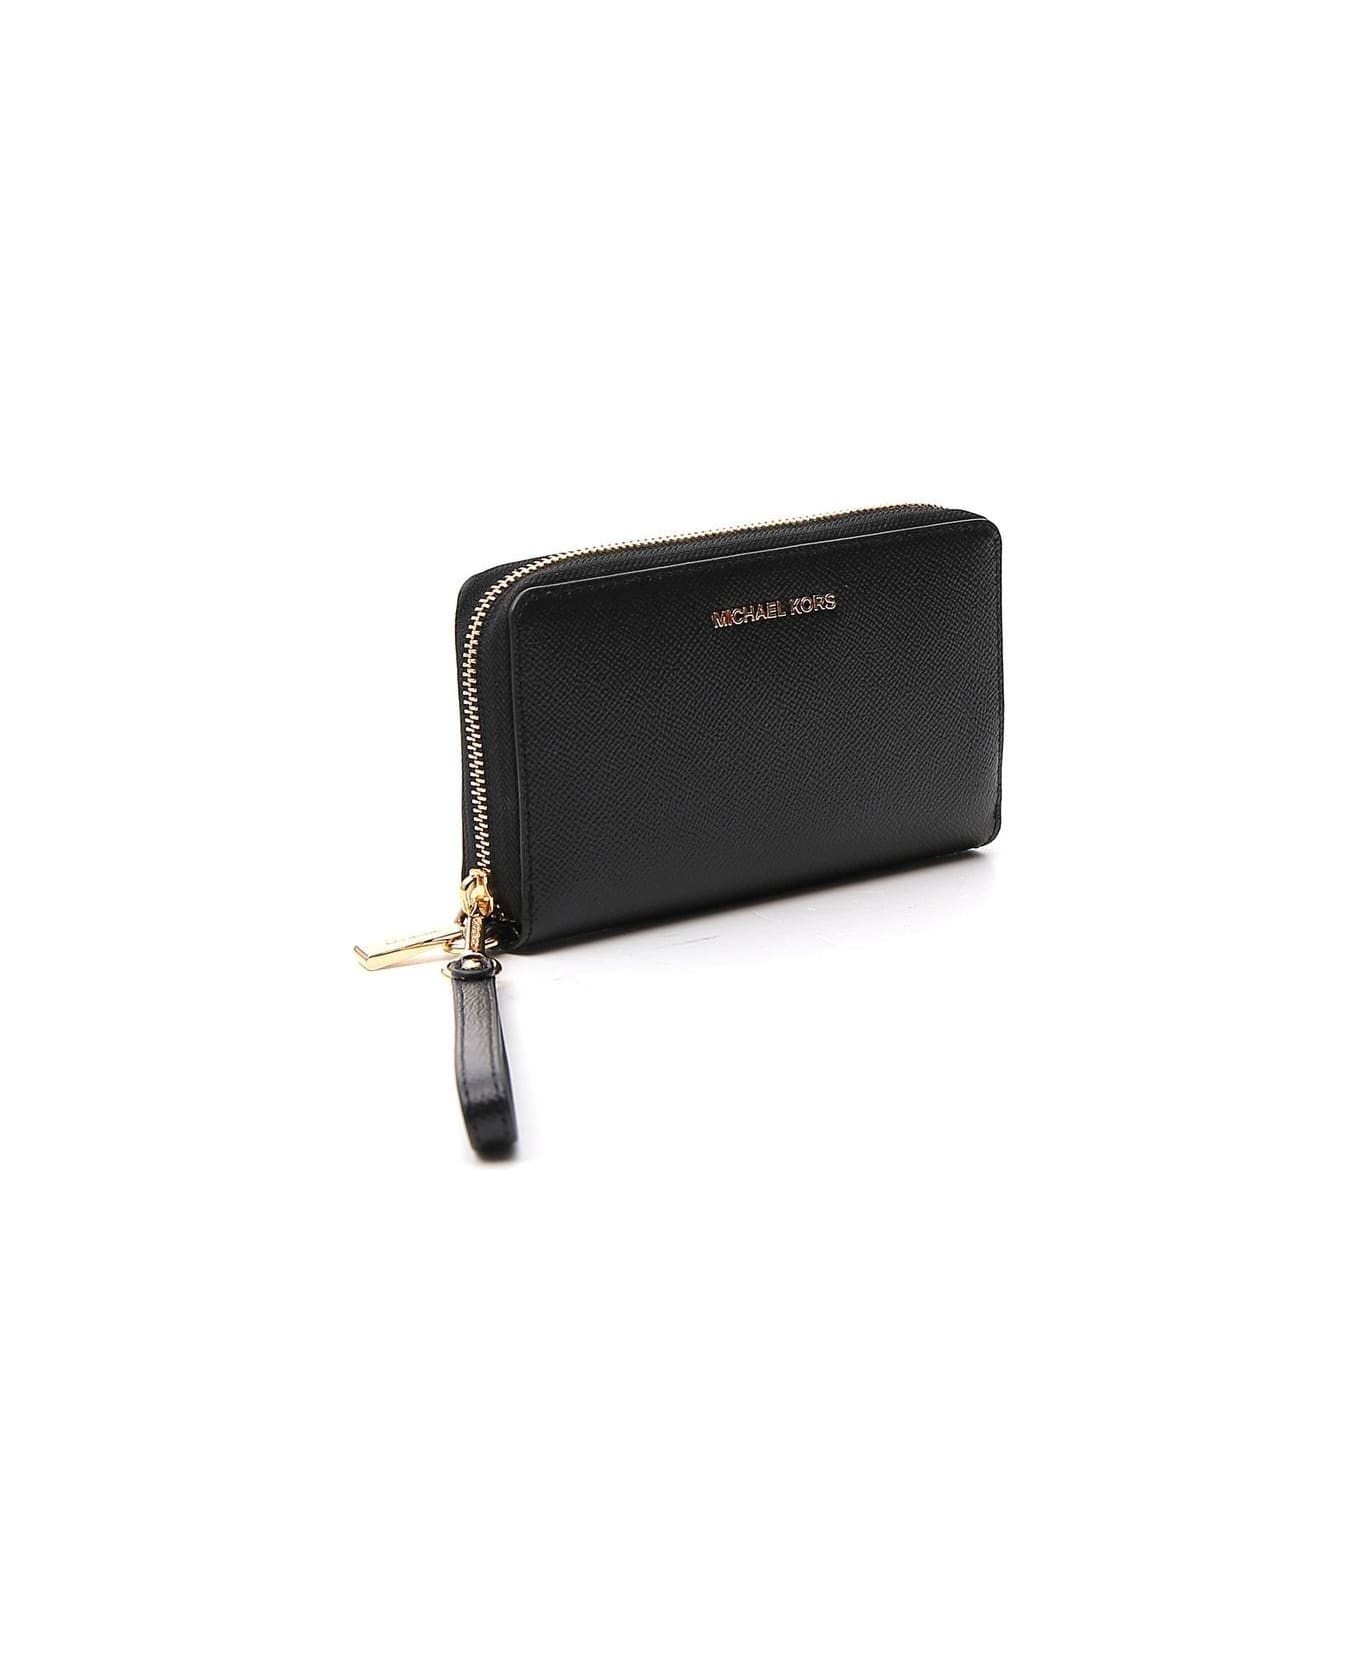 Michael Kors Jet Set Wallet - Black 財布